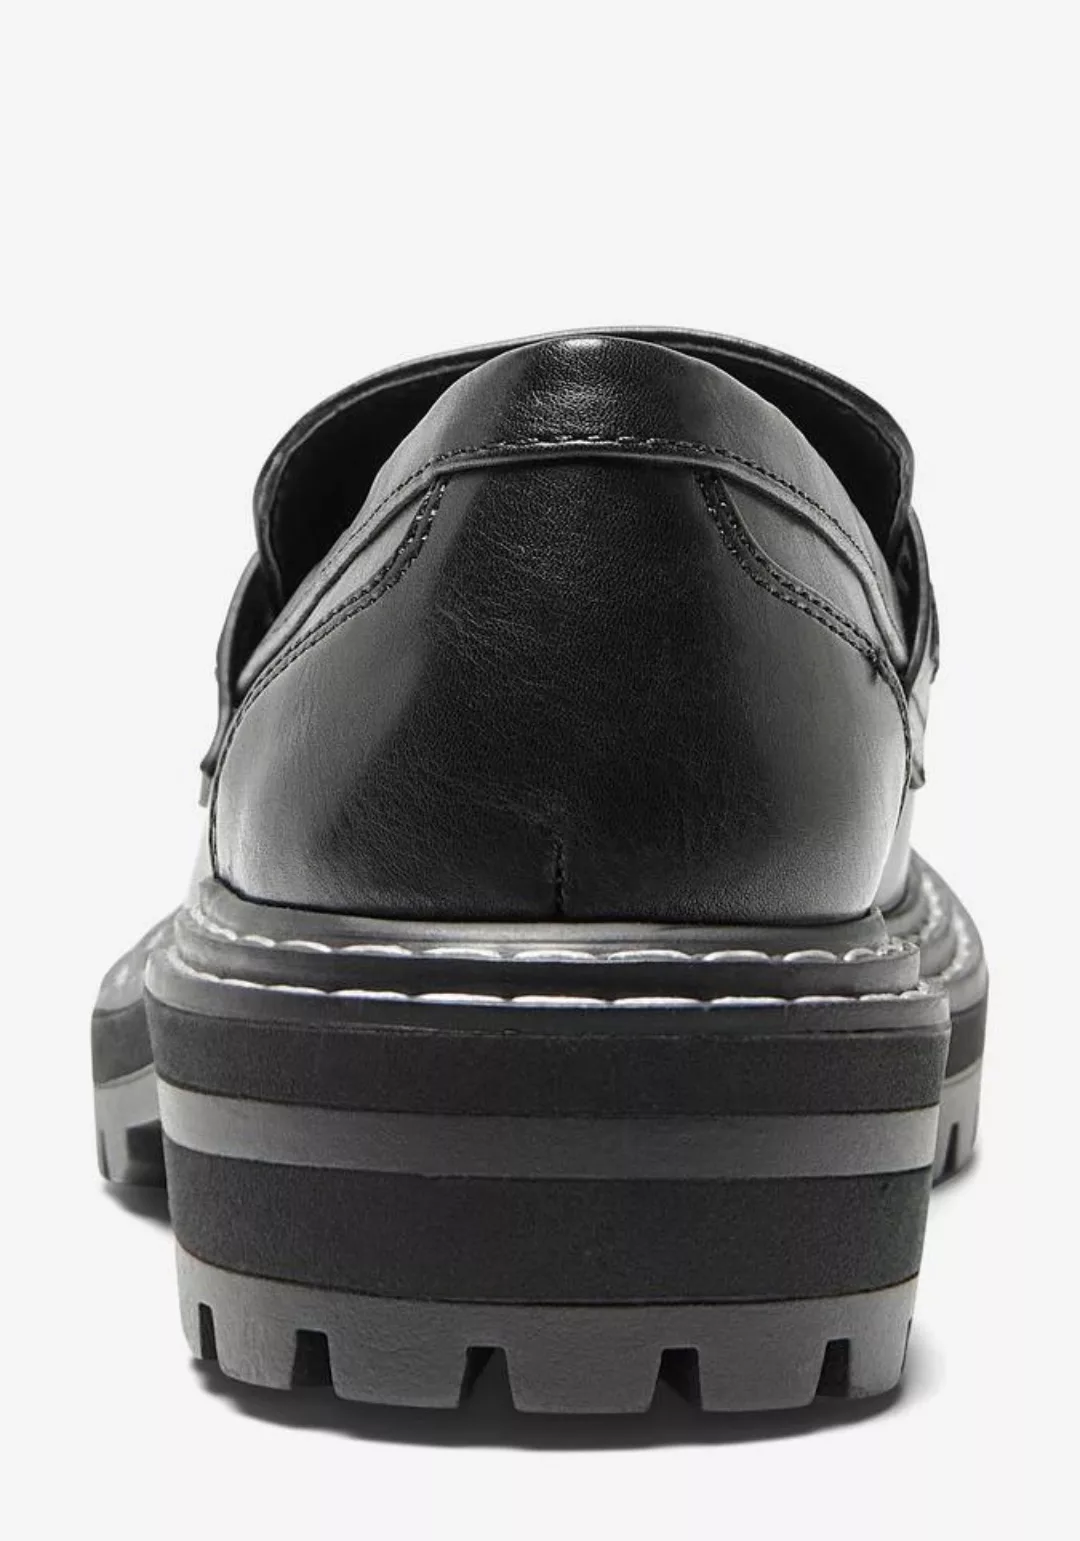 ONLY Shoes Slipper "ONLBETH-3", Chunky Slipper, Plateau Slipper mit markant günstig online kaufen